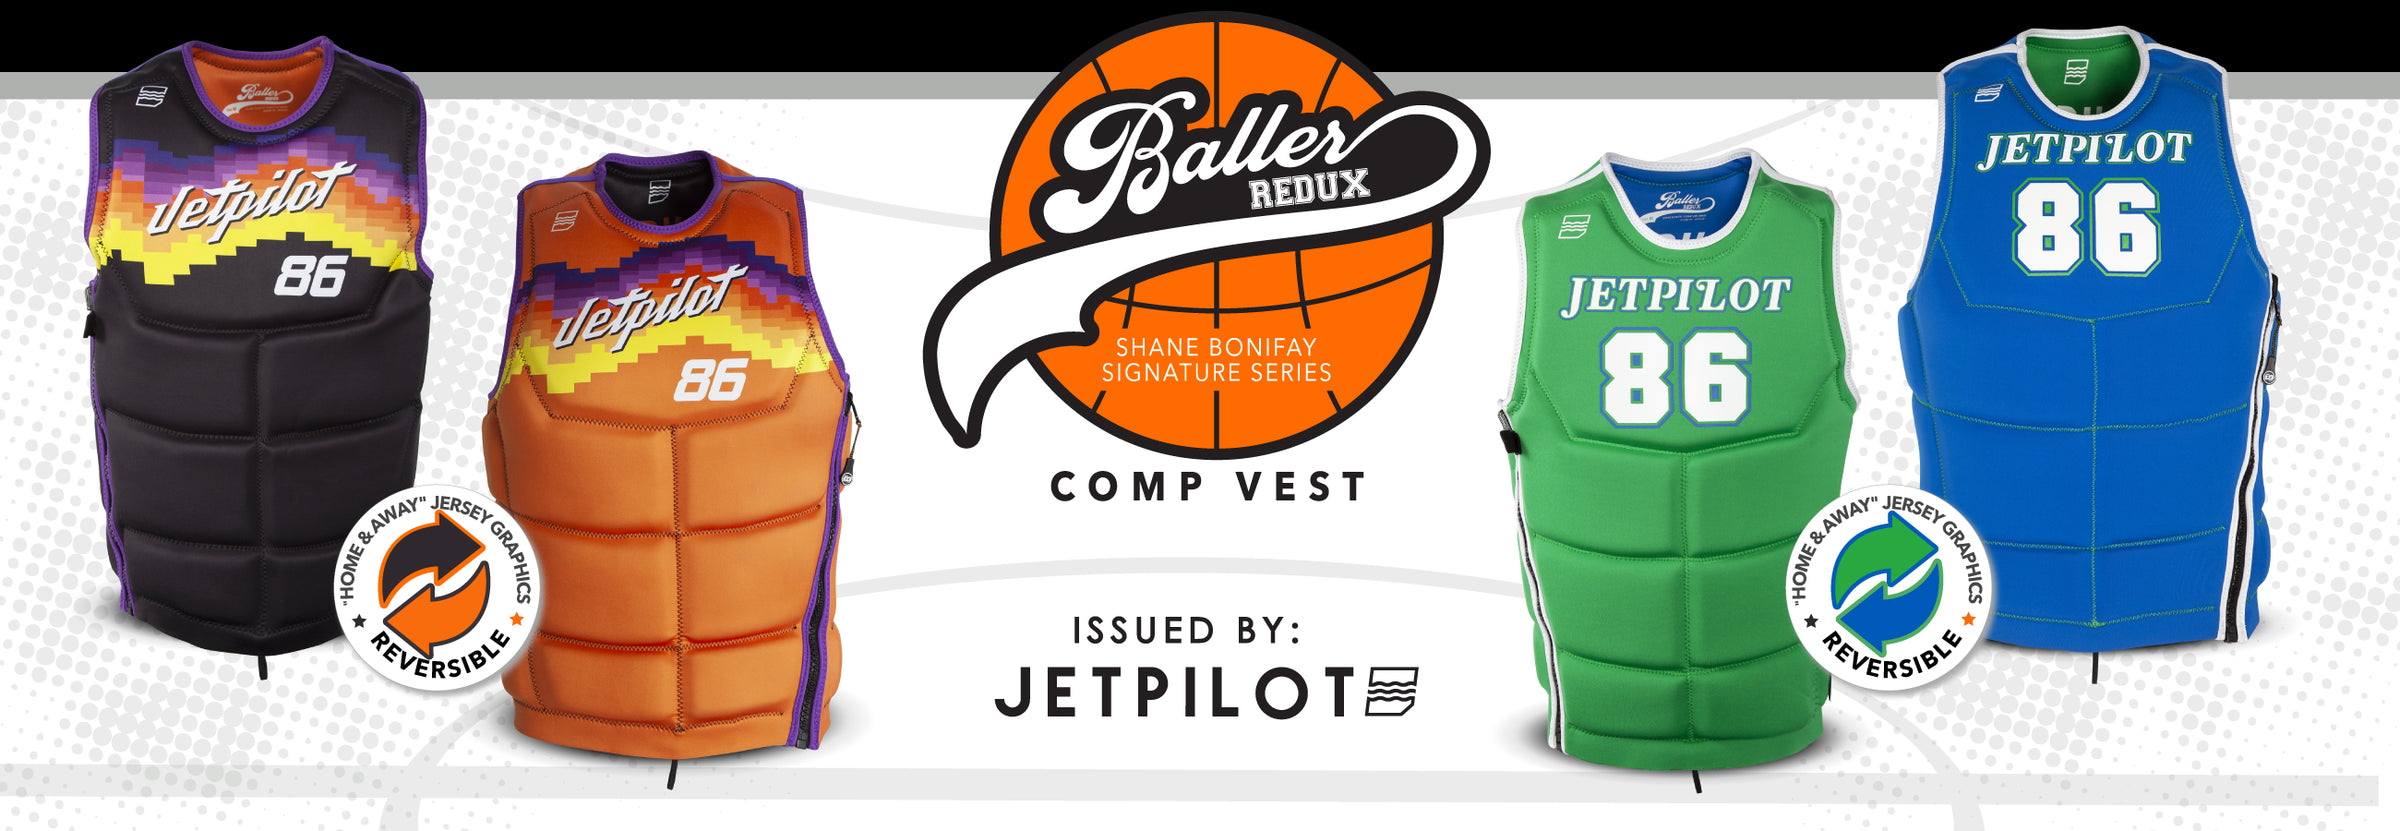 Banner showing all 2 colorways of the Jetpilot Bonifay Comp Vest